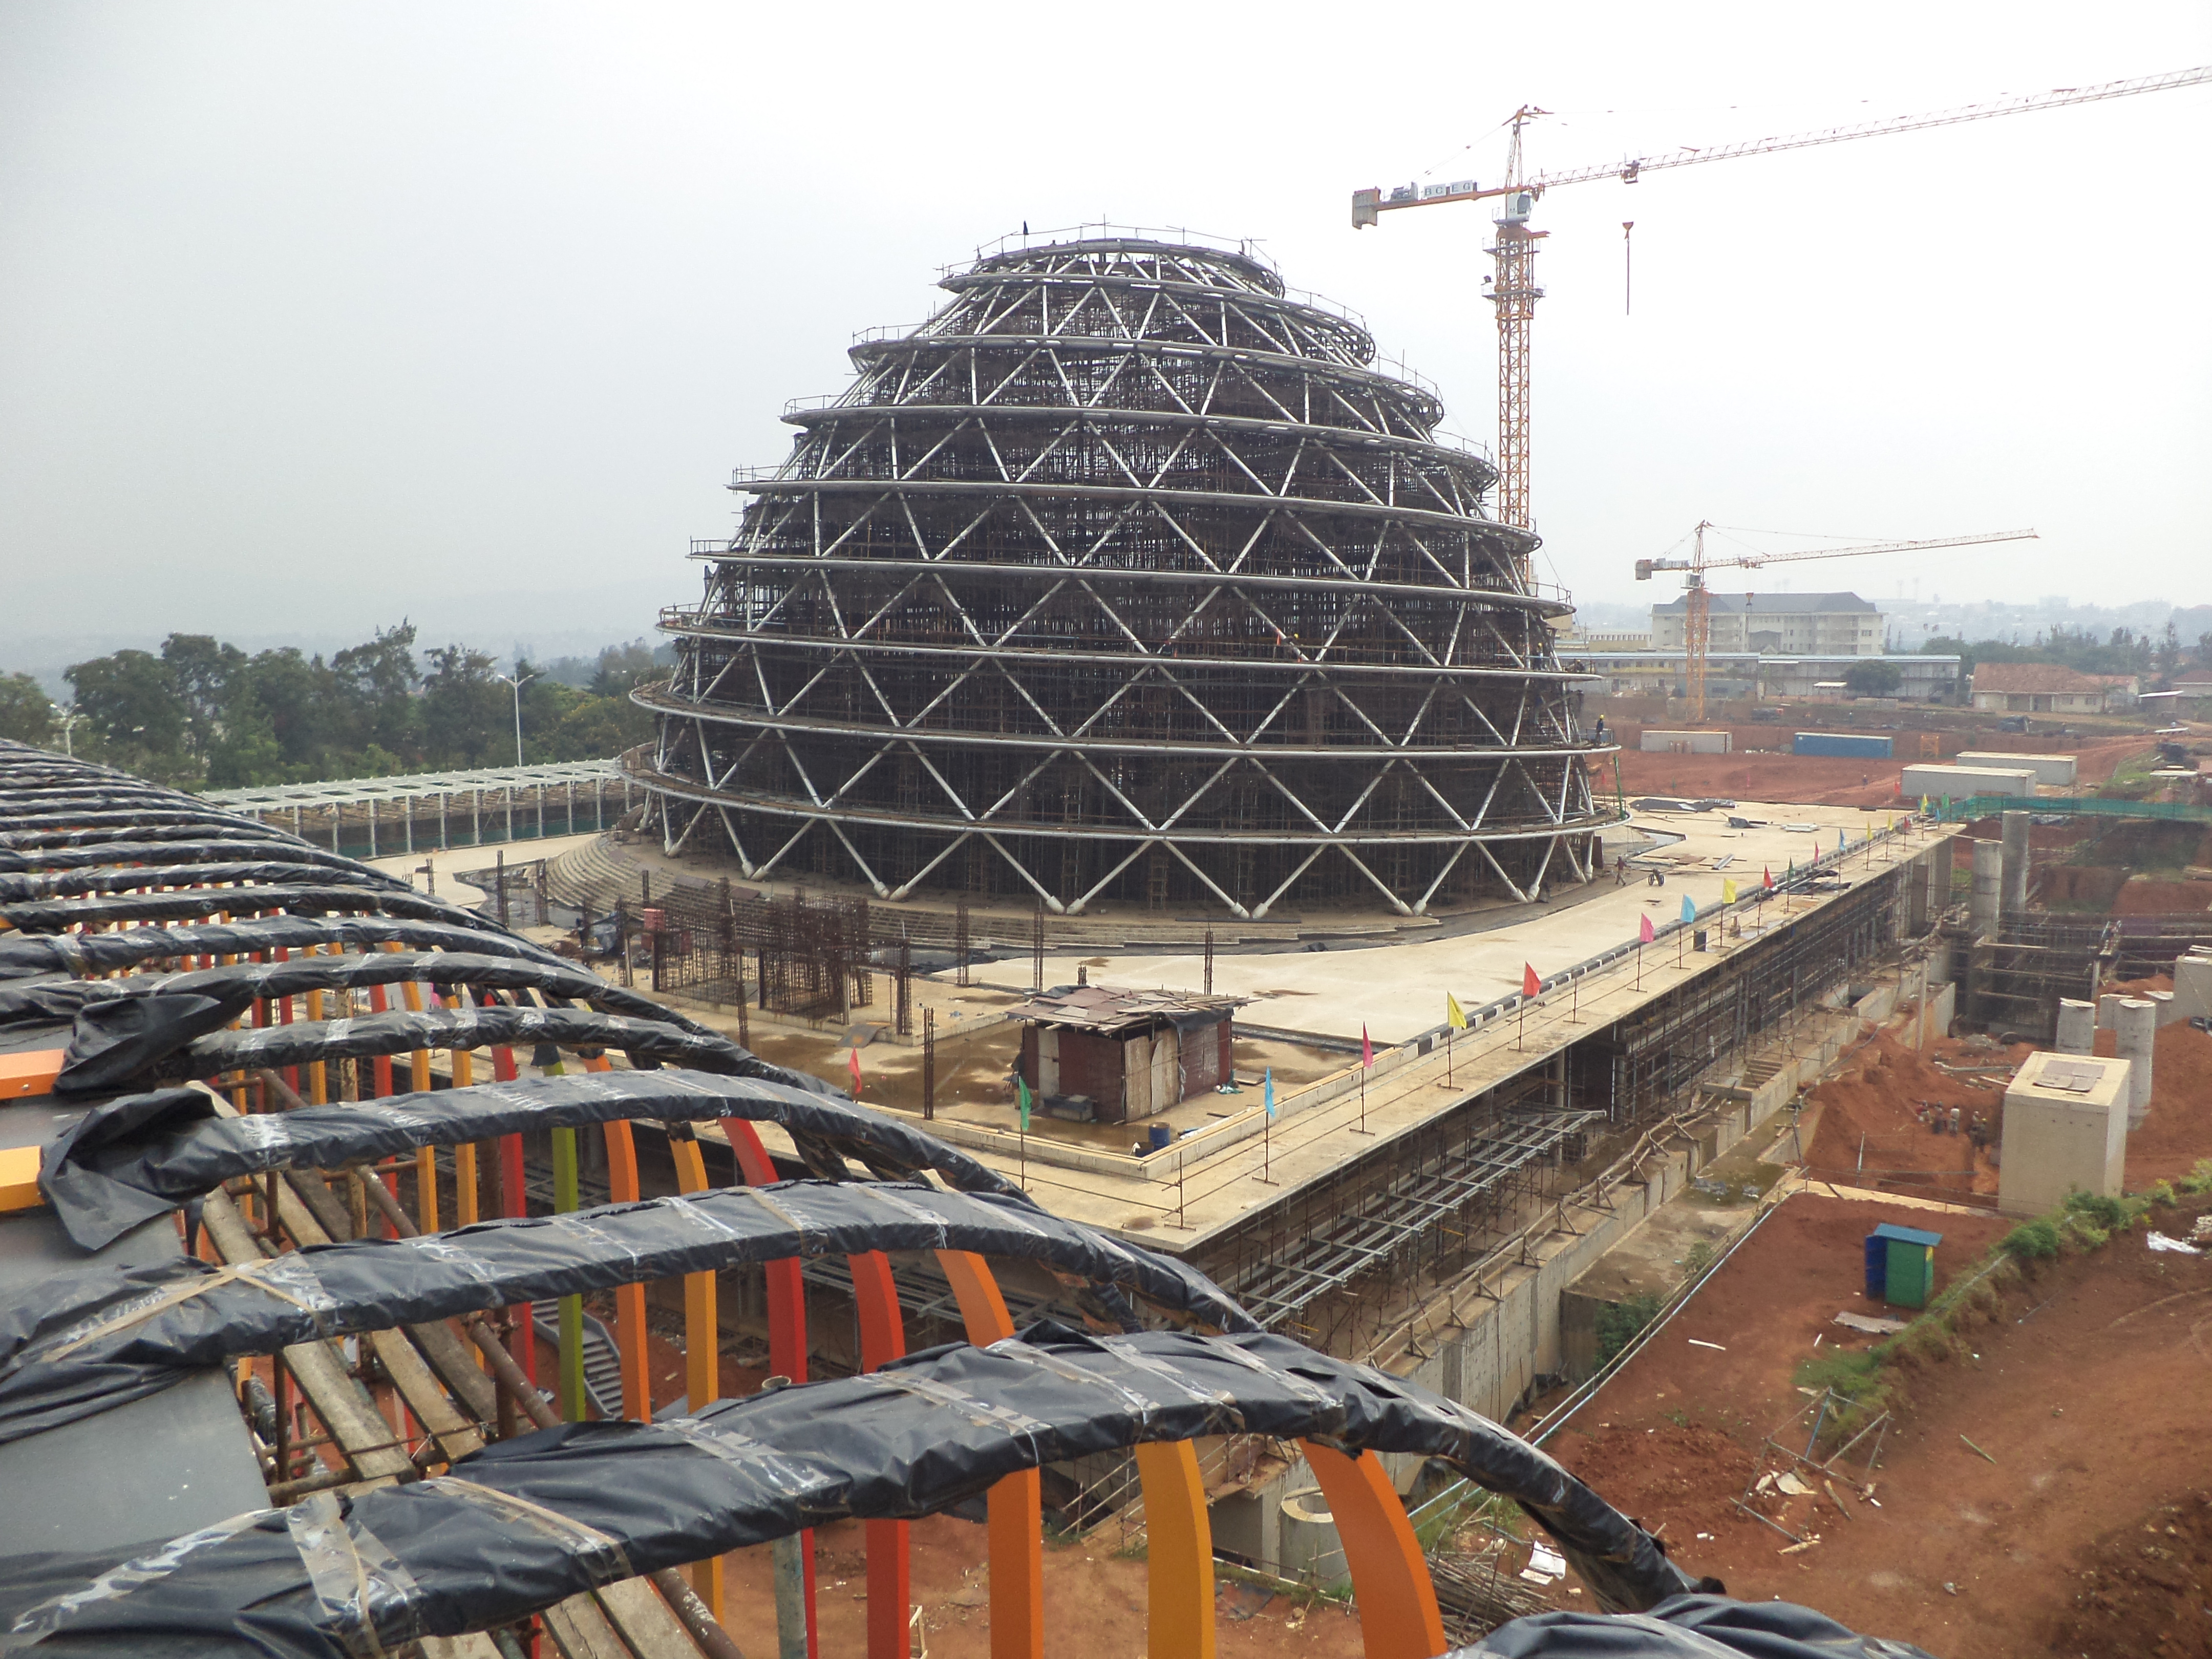 kigali convention center under construction 7